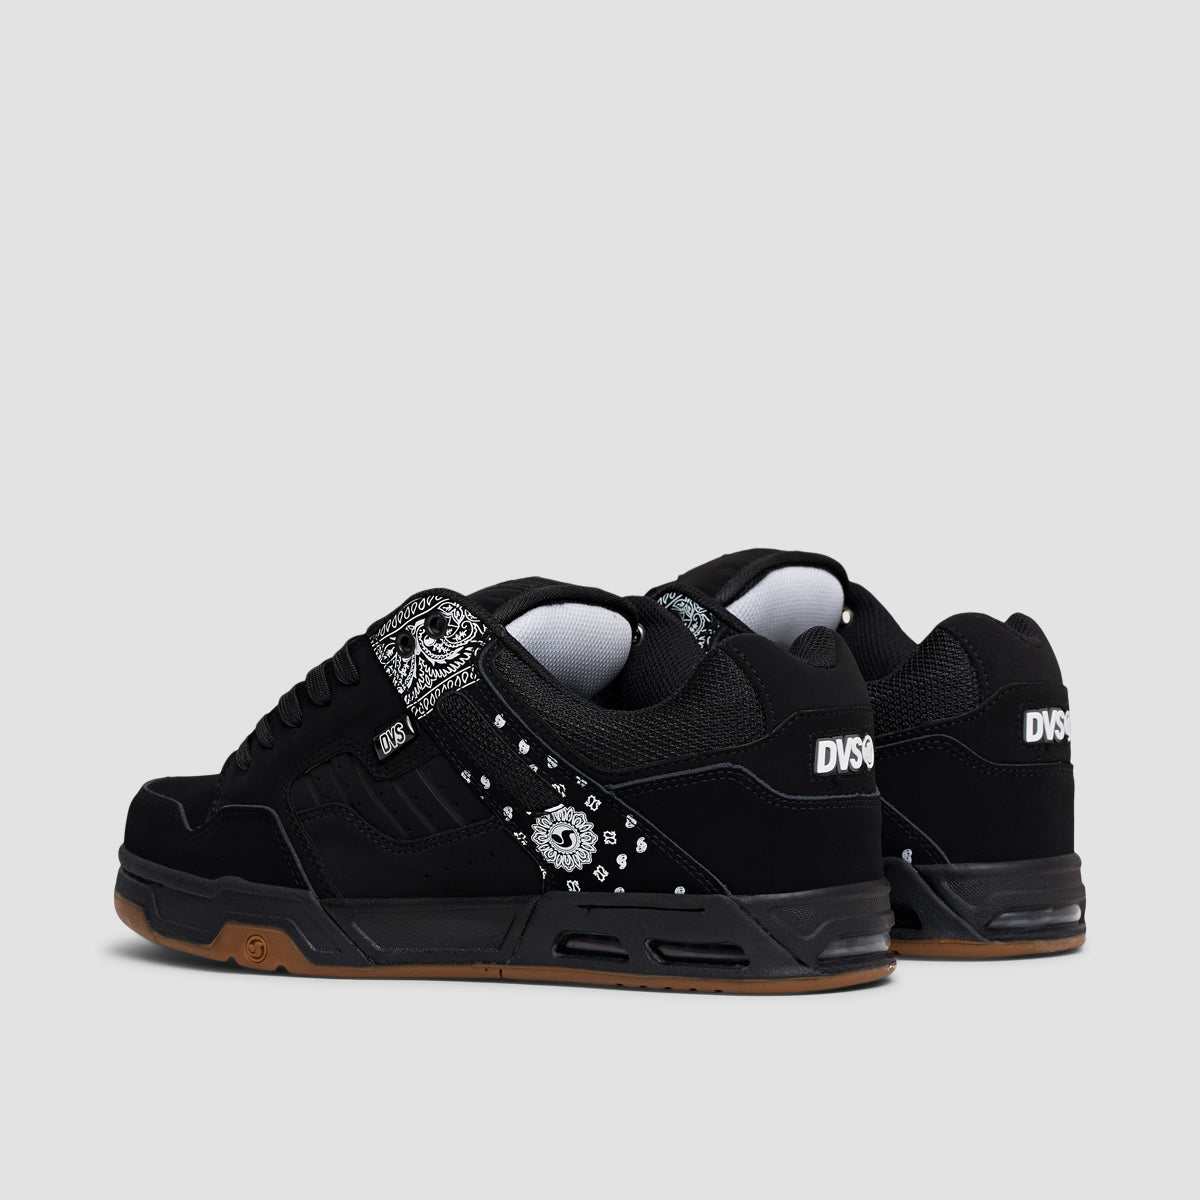 DVS Enduro Heir Shoes - Black/Gum/Print Nubuck